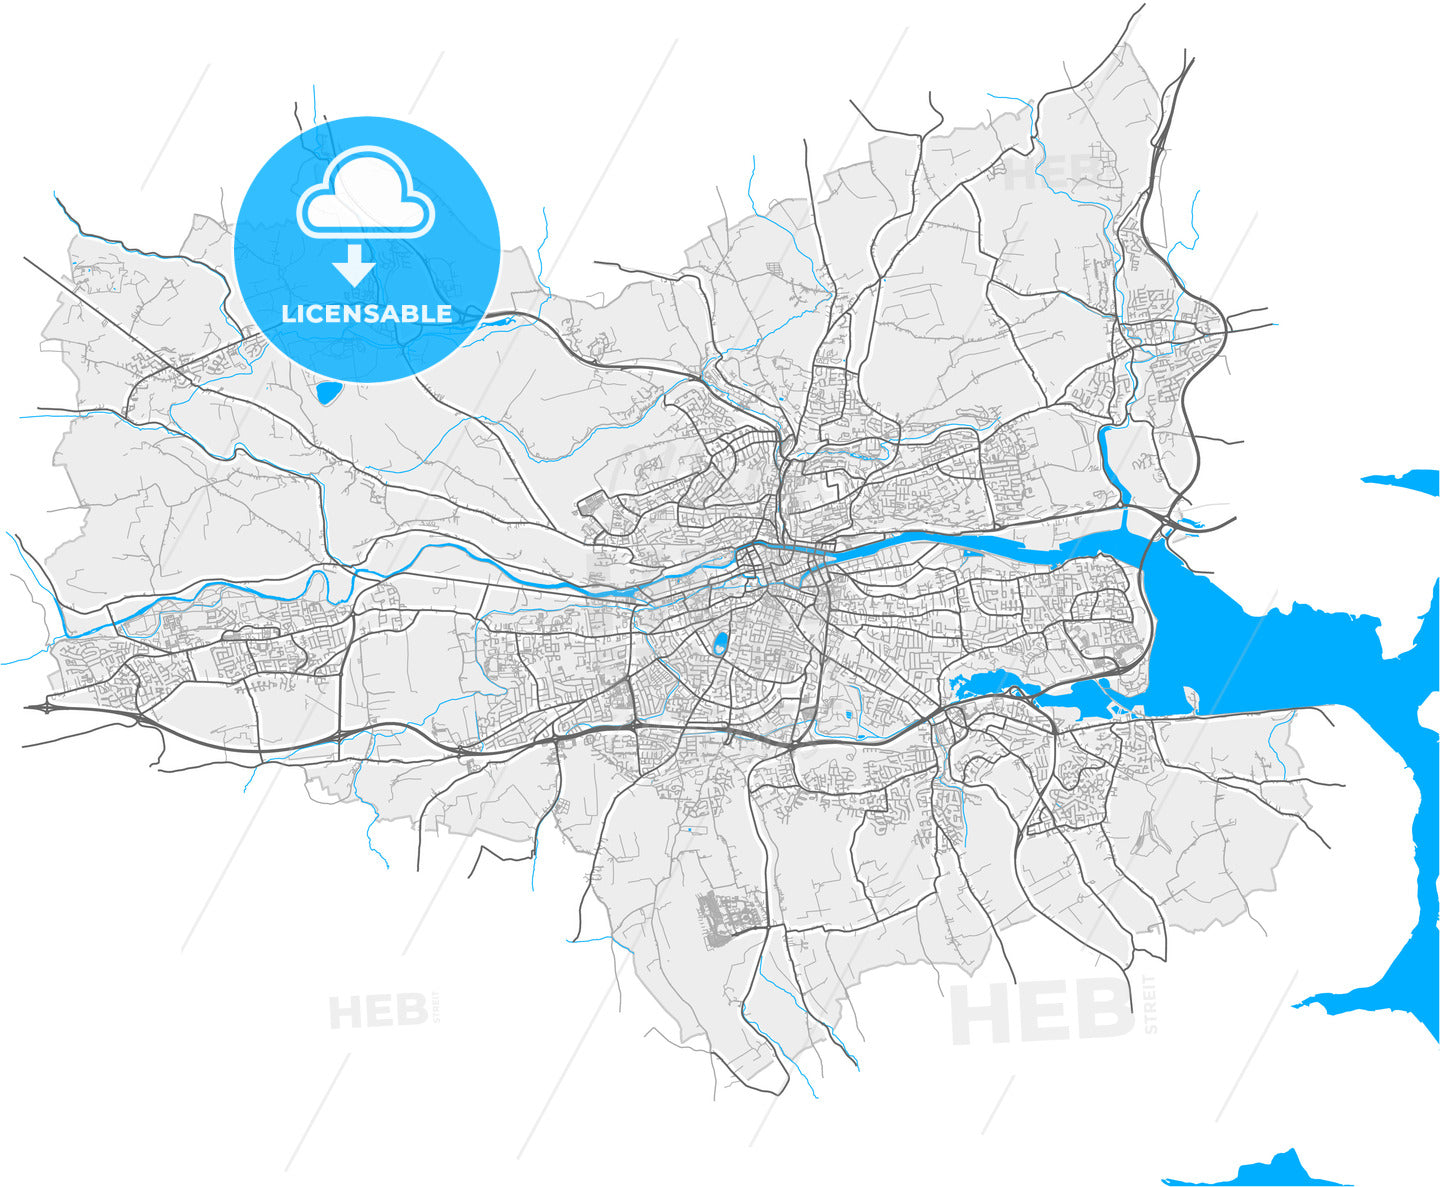 Cork, County Cork, Ireland, high quality vector map